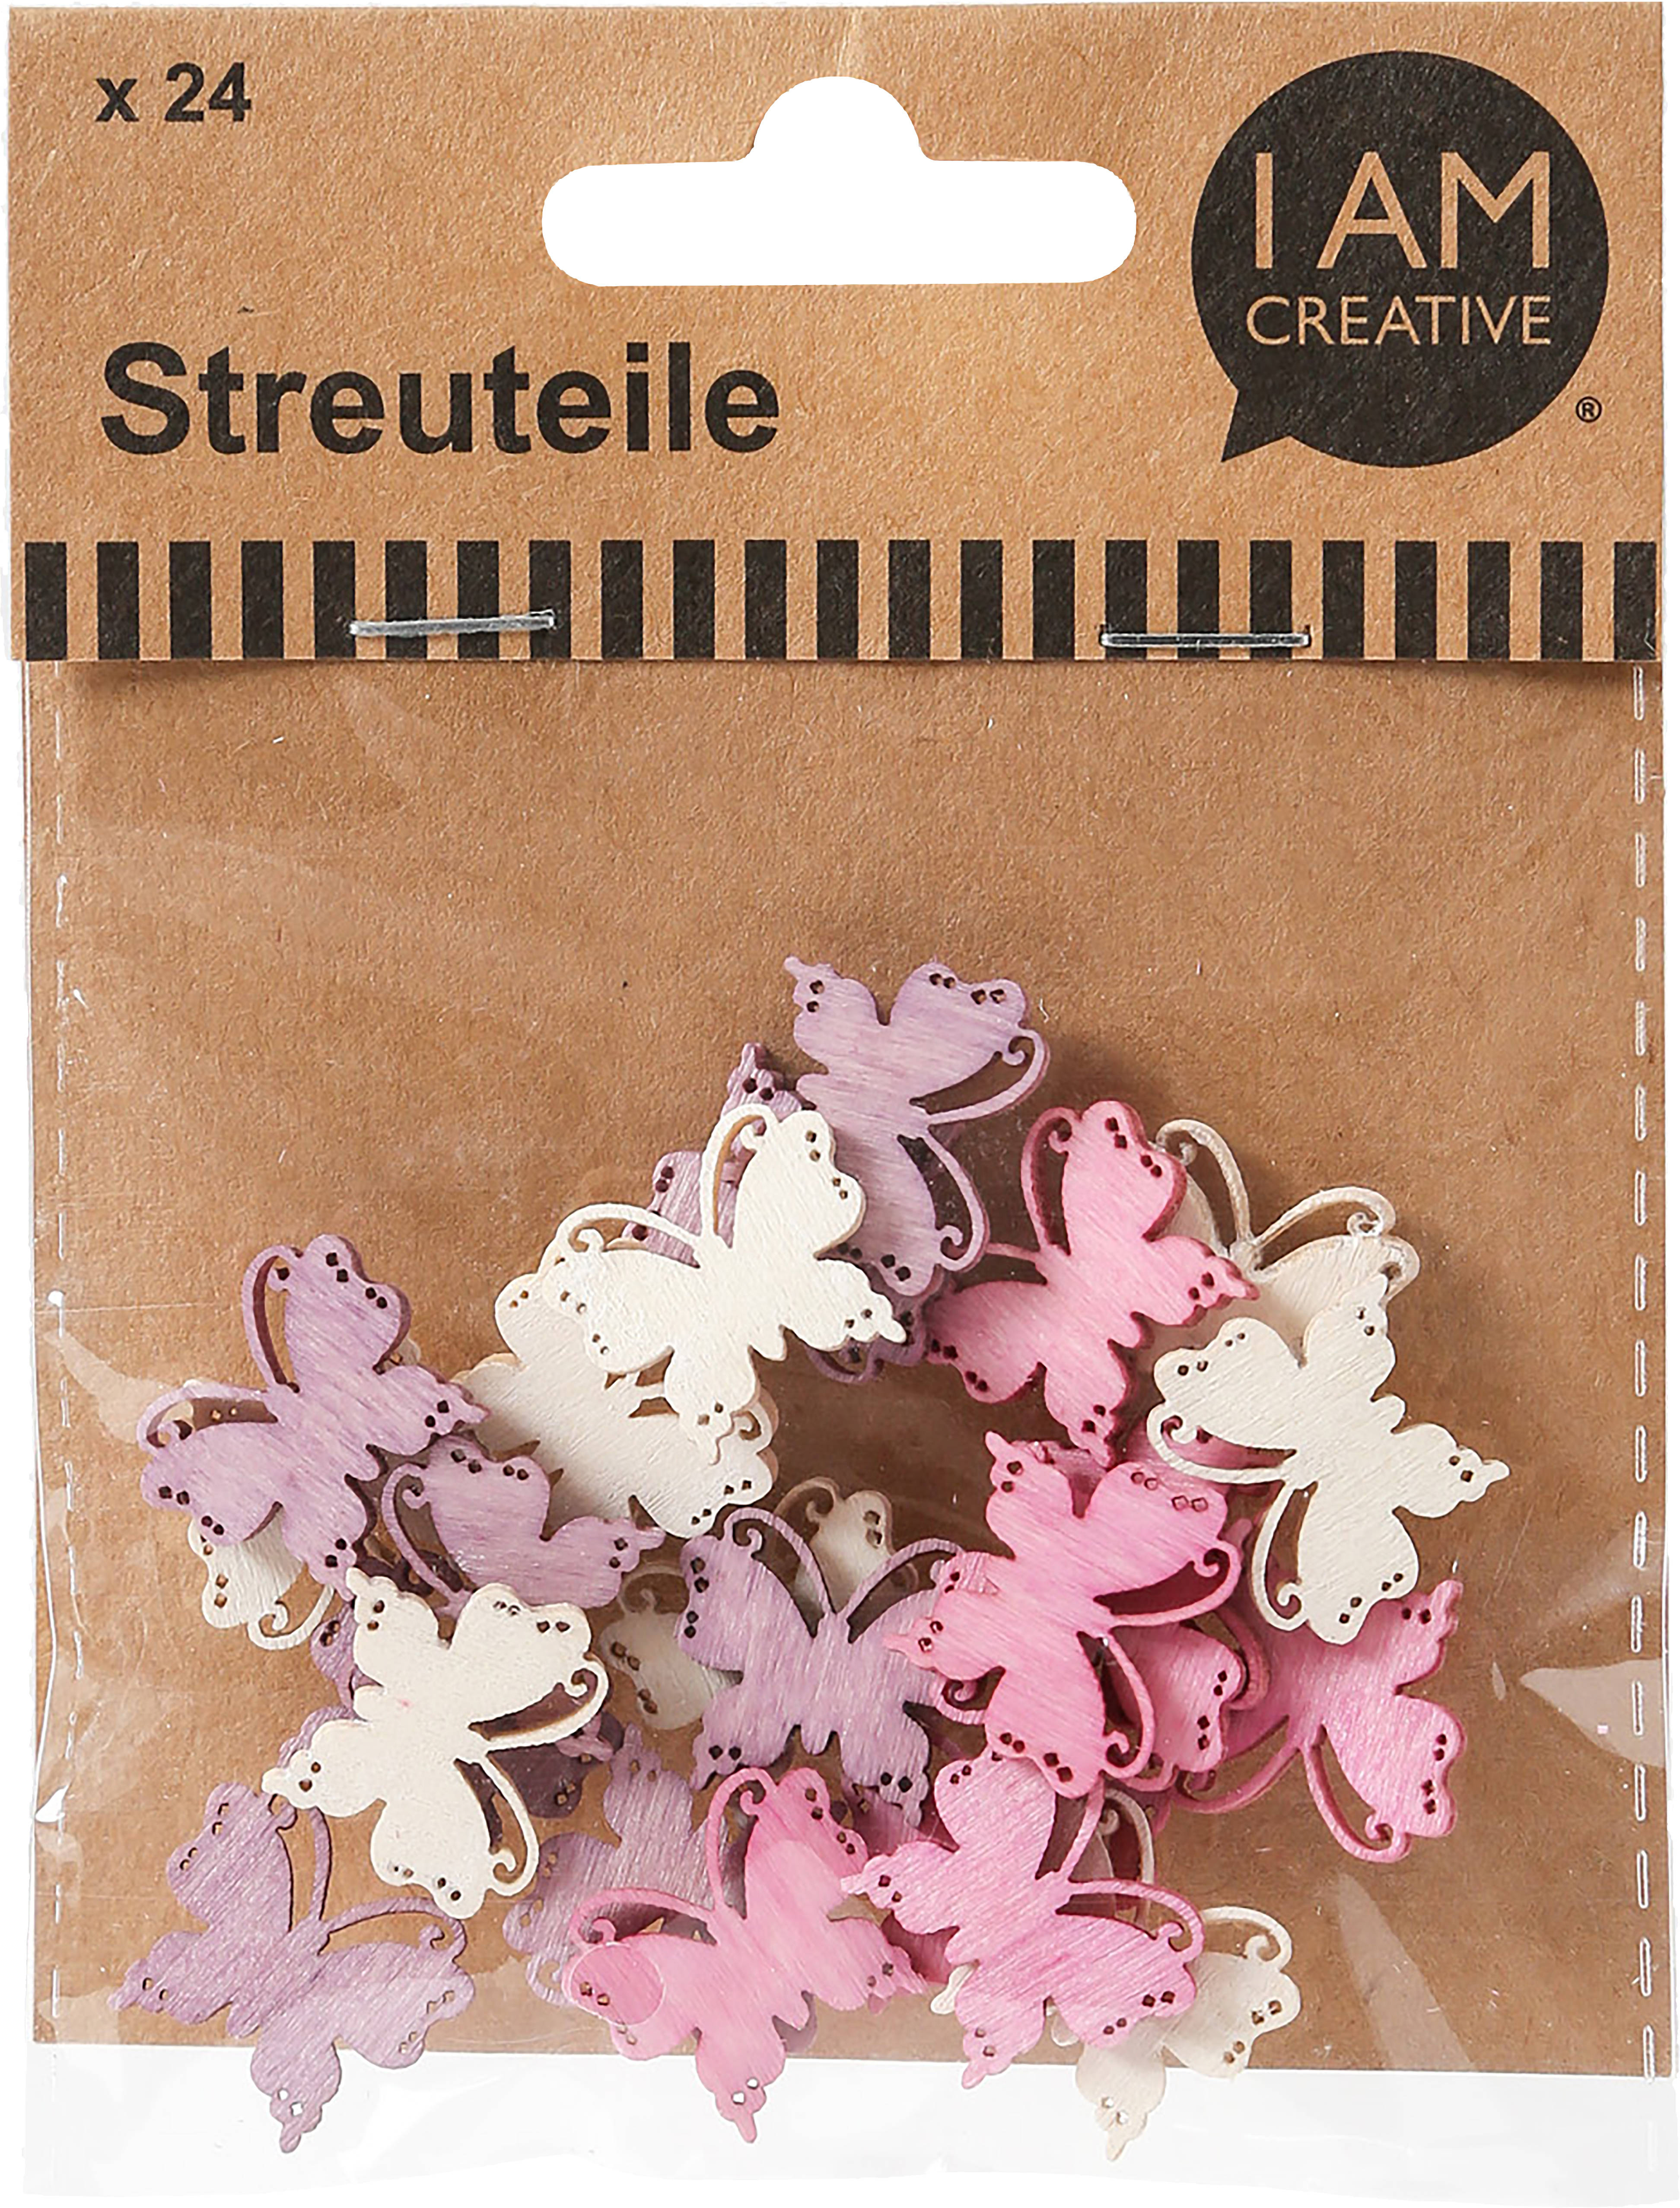 I AM CREATIVE Streuteile Schmetterling MAA4501.80 III, bunt, 24 Stk.